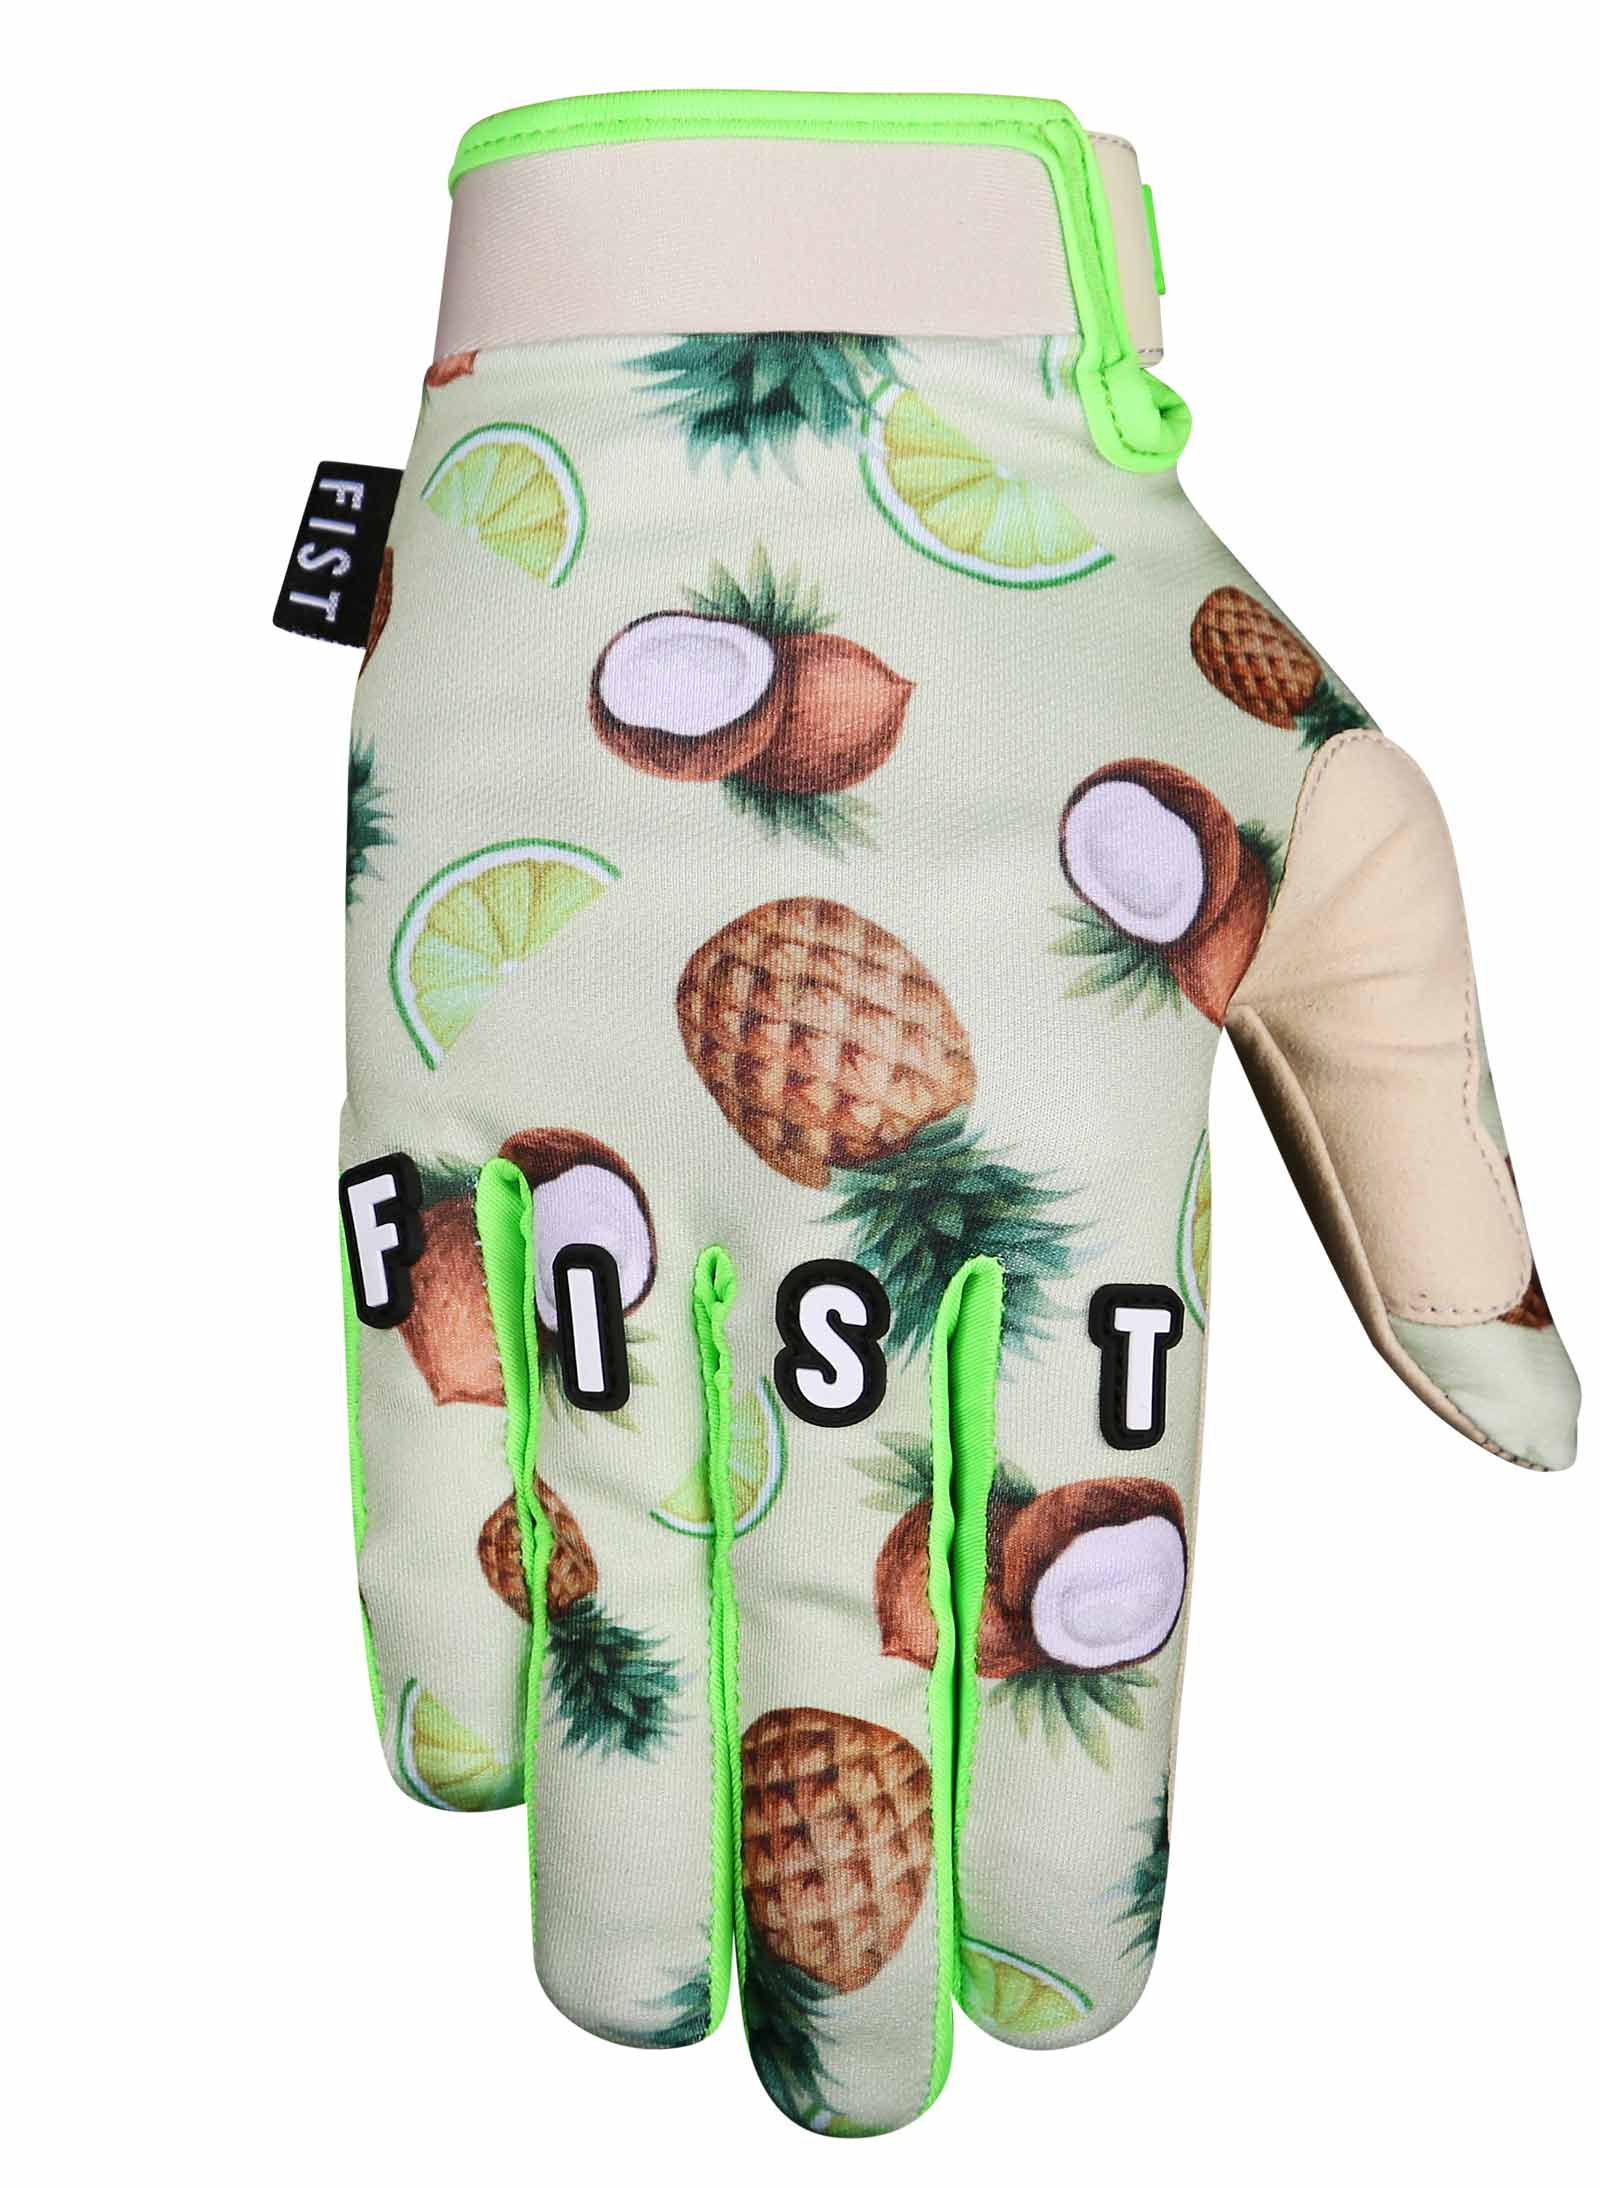 FIST Pina Colada Glove